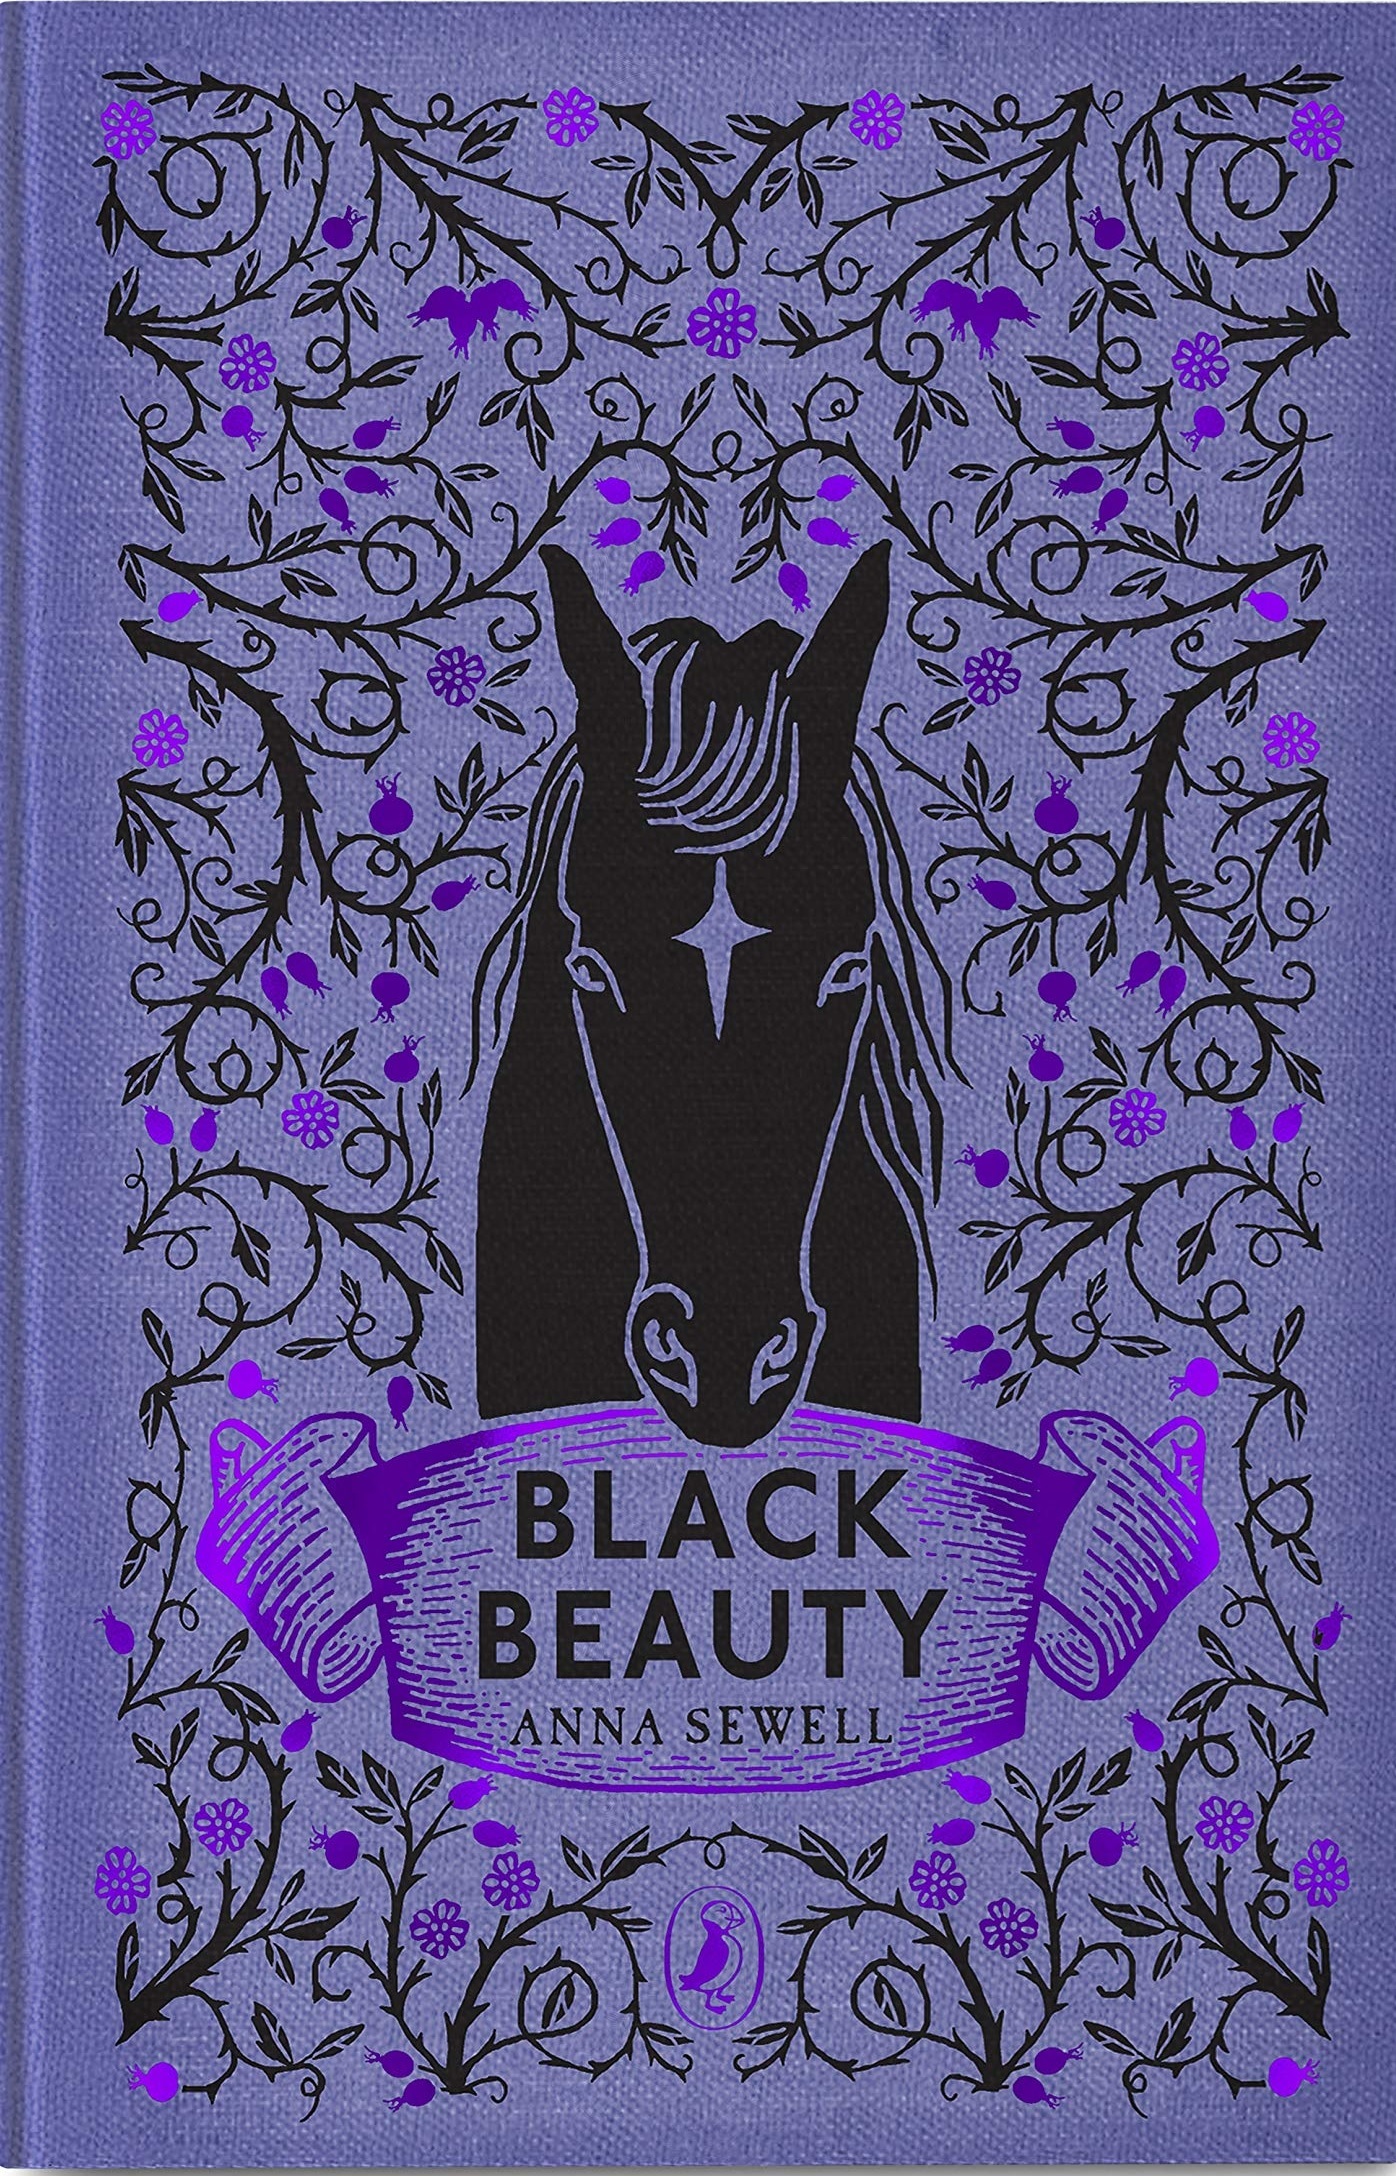 The Black Beauty